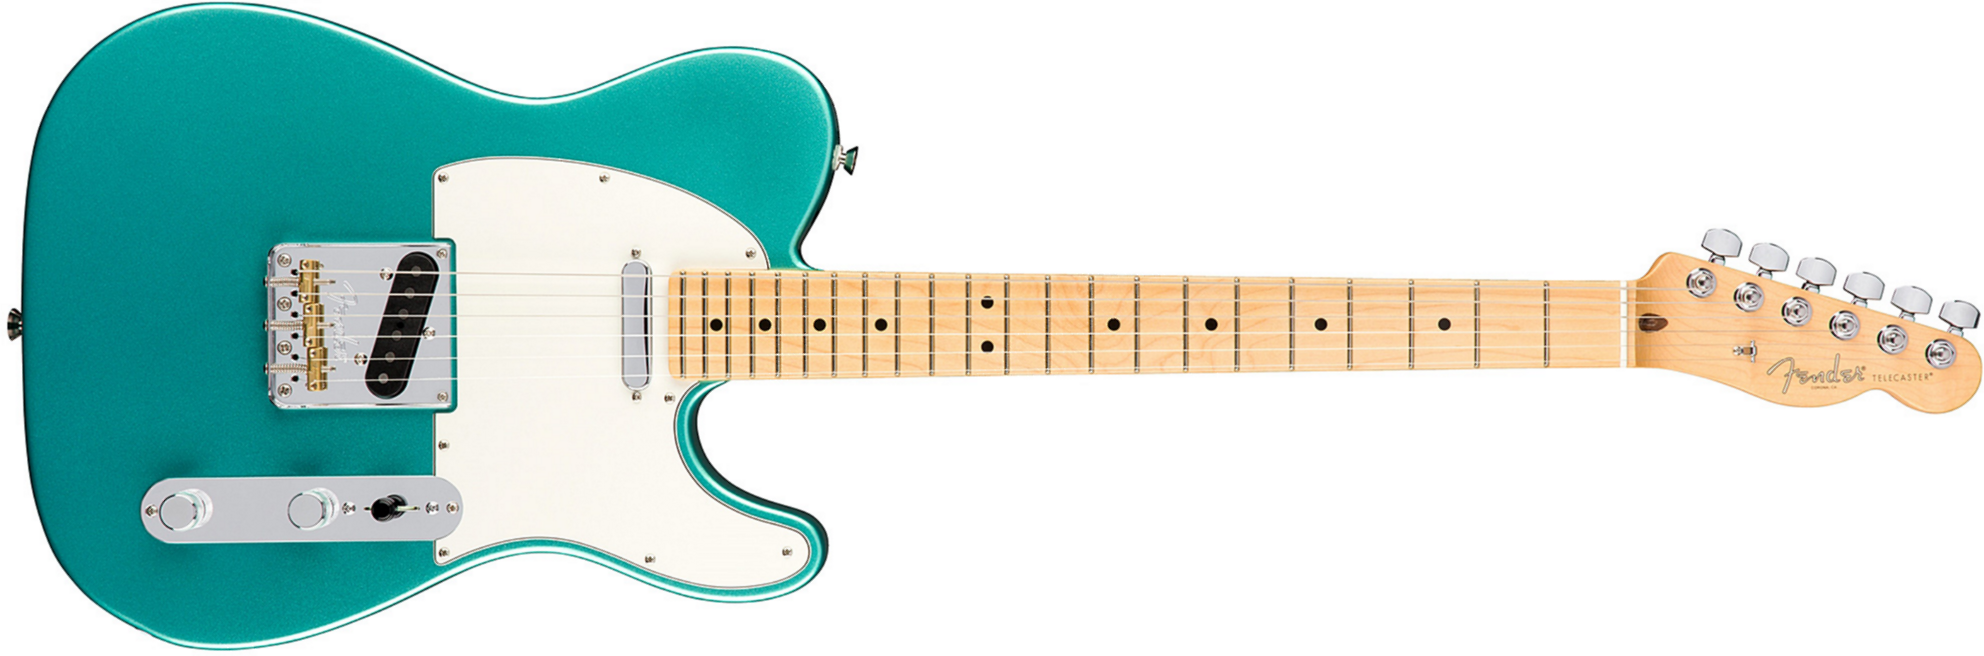 Fender Tele American Professional 2s Usa Mn - Mystic Seafoam - Televorm elektrische gitaar - Main picture